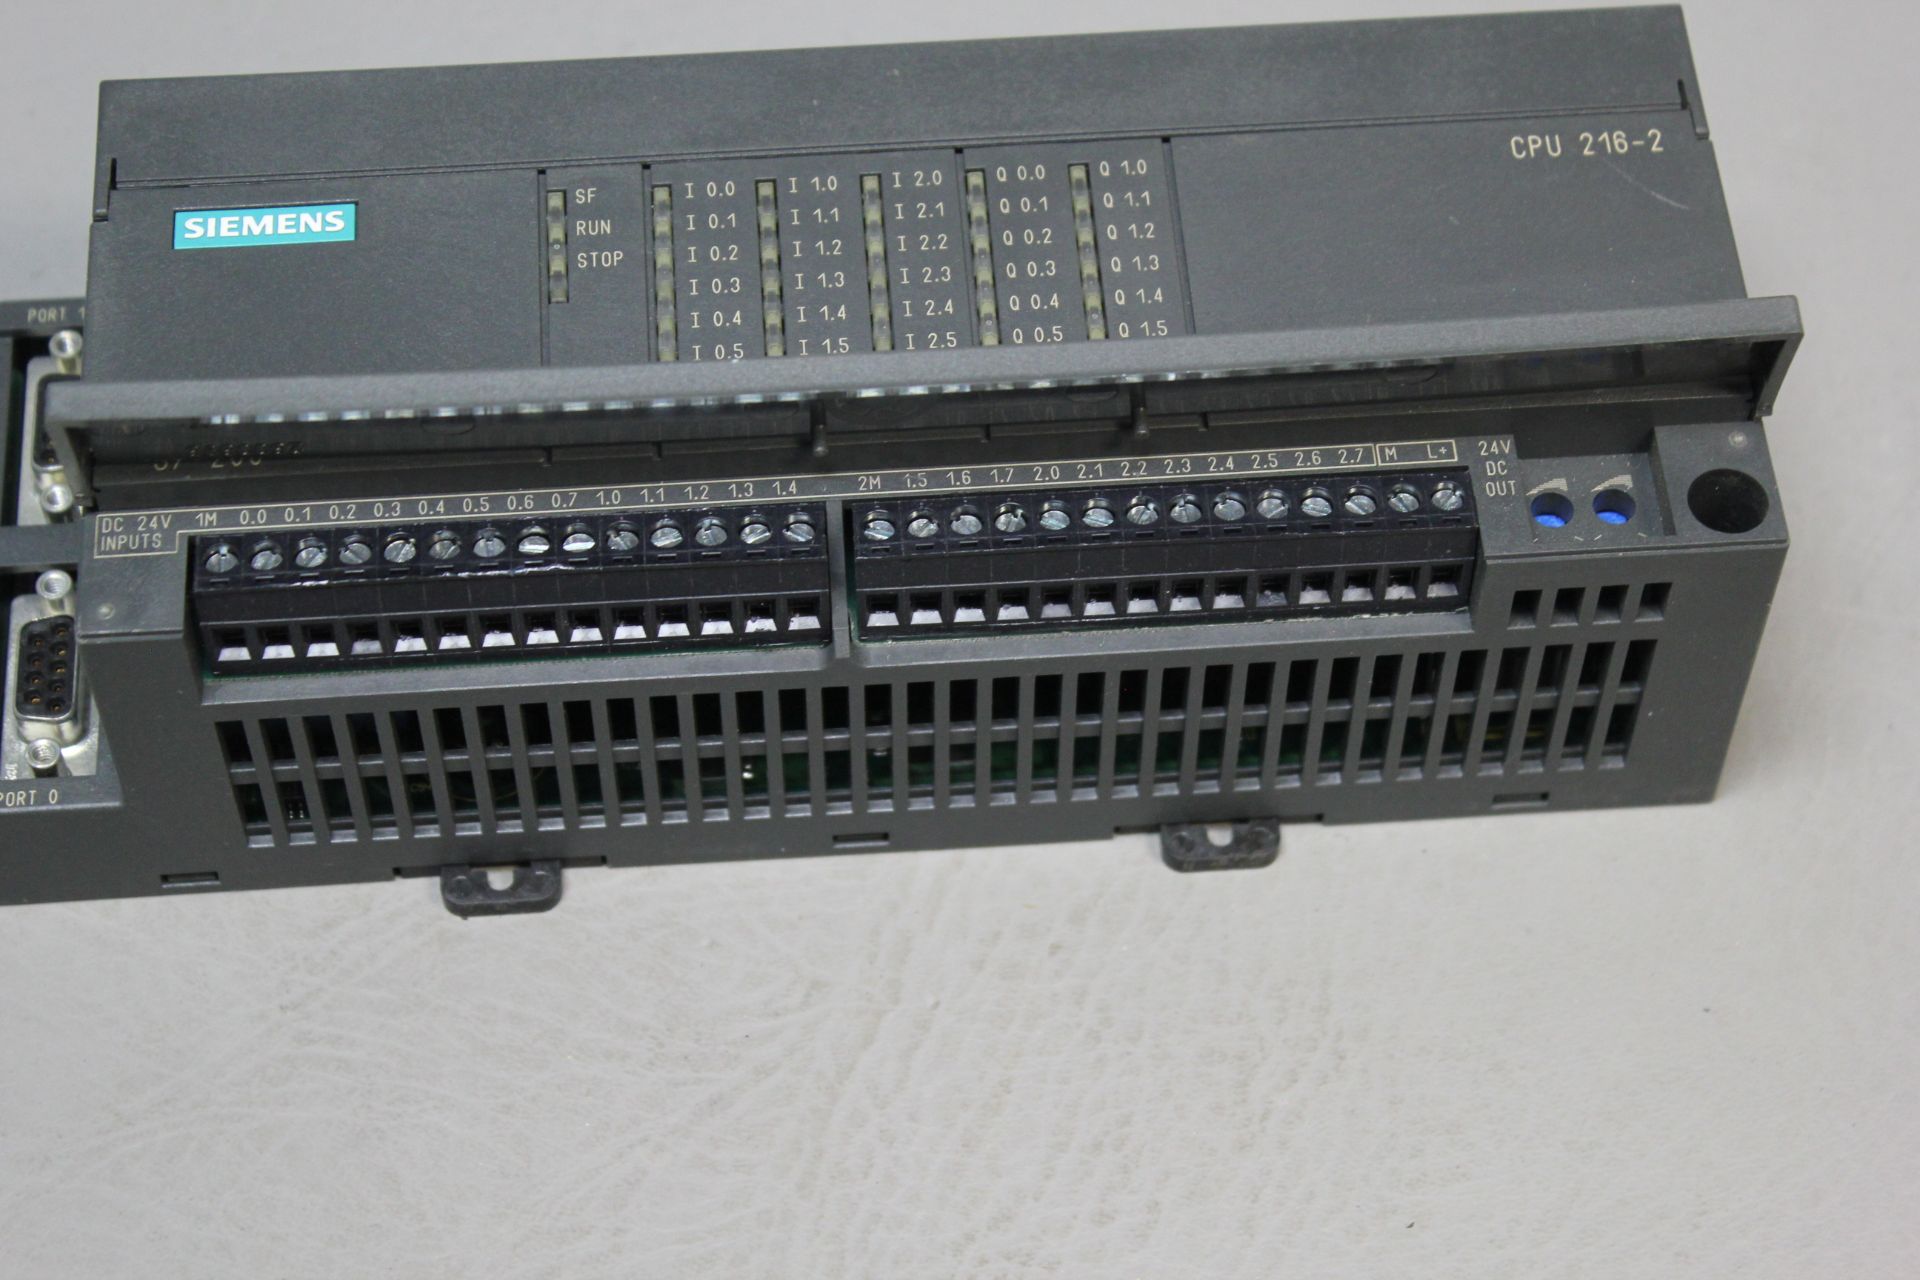 SIEMENS S7-200 PLC CPU MODULE - Image 2 of 4